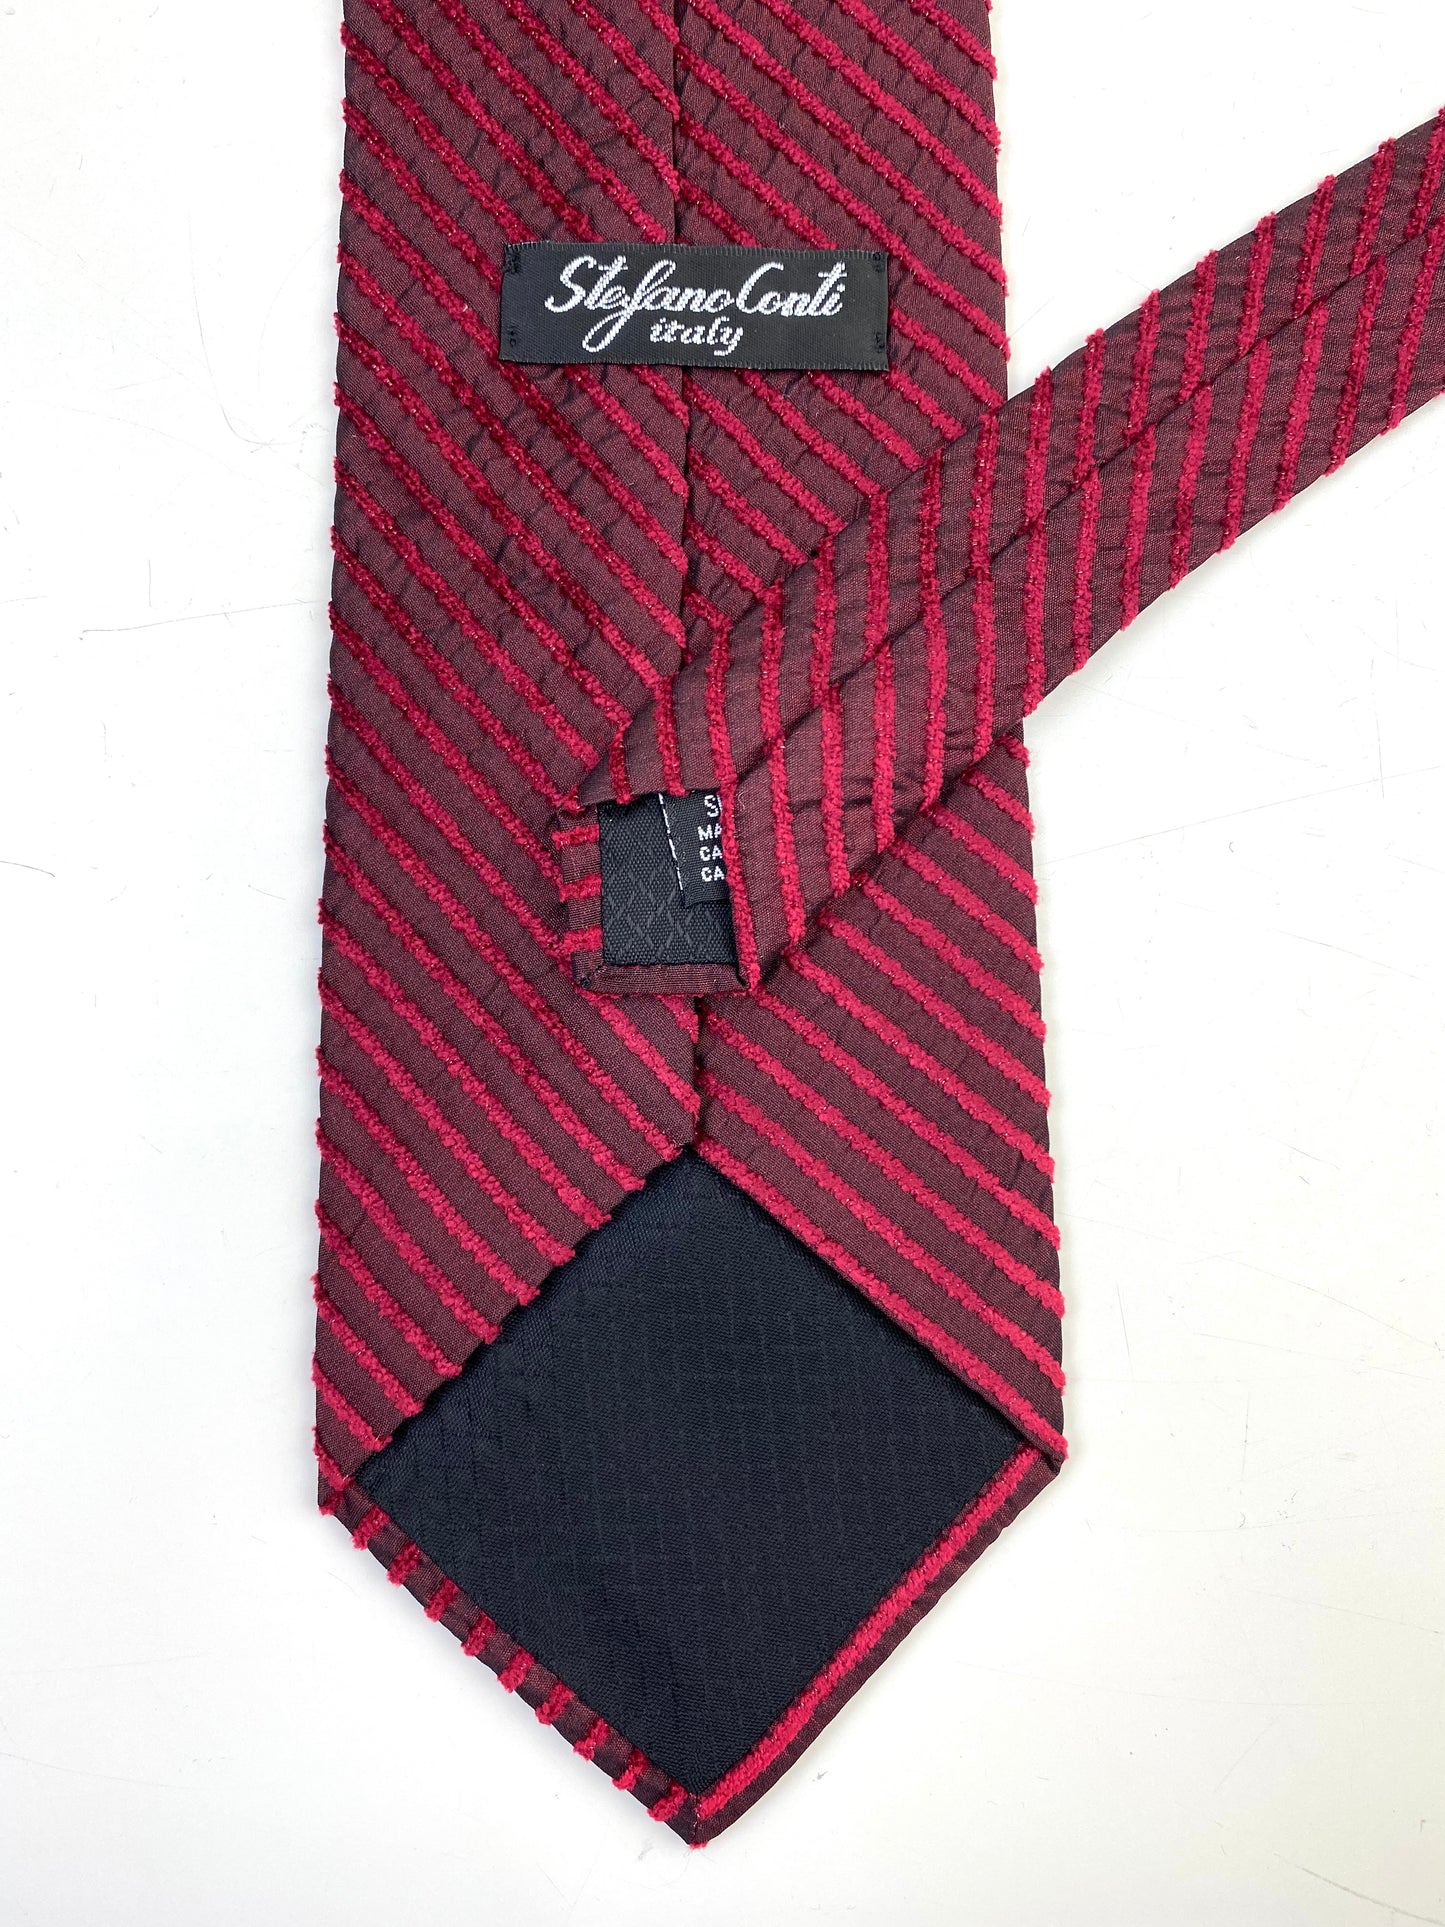 90s Deadstock Silk Necktie, Men's Vintage Wine Monochrome Diagonal Stripe Tie, NOS